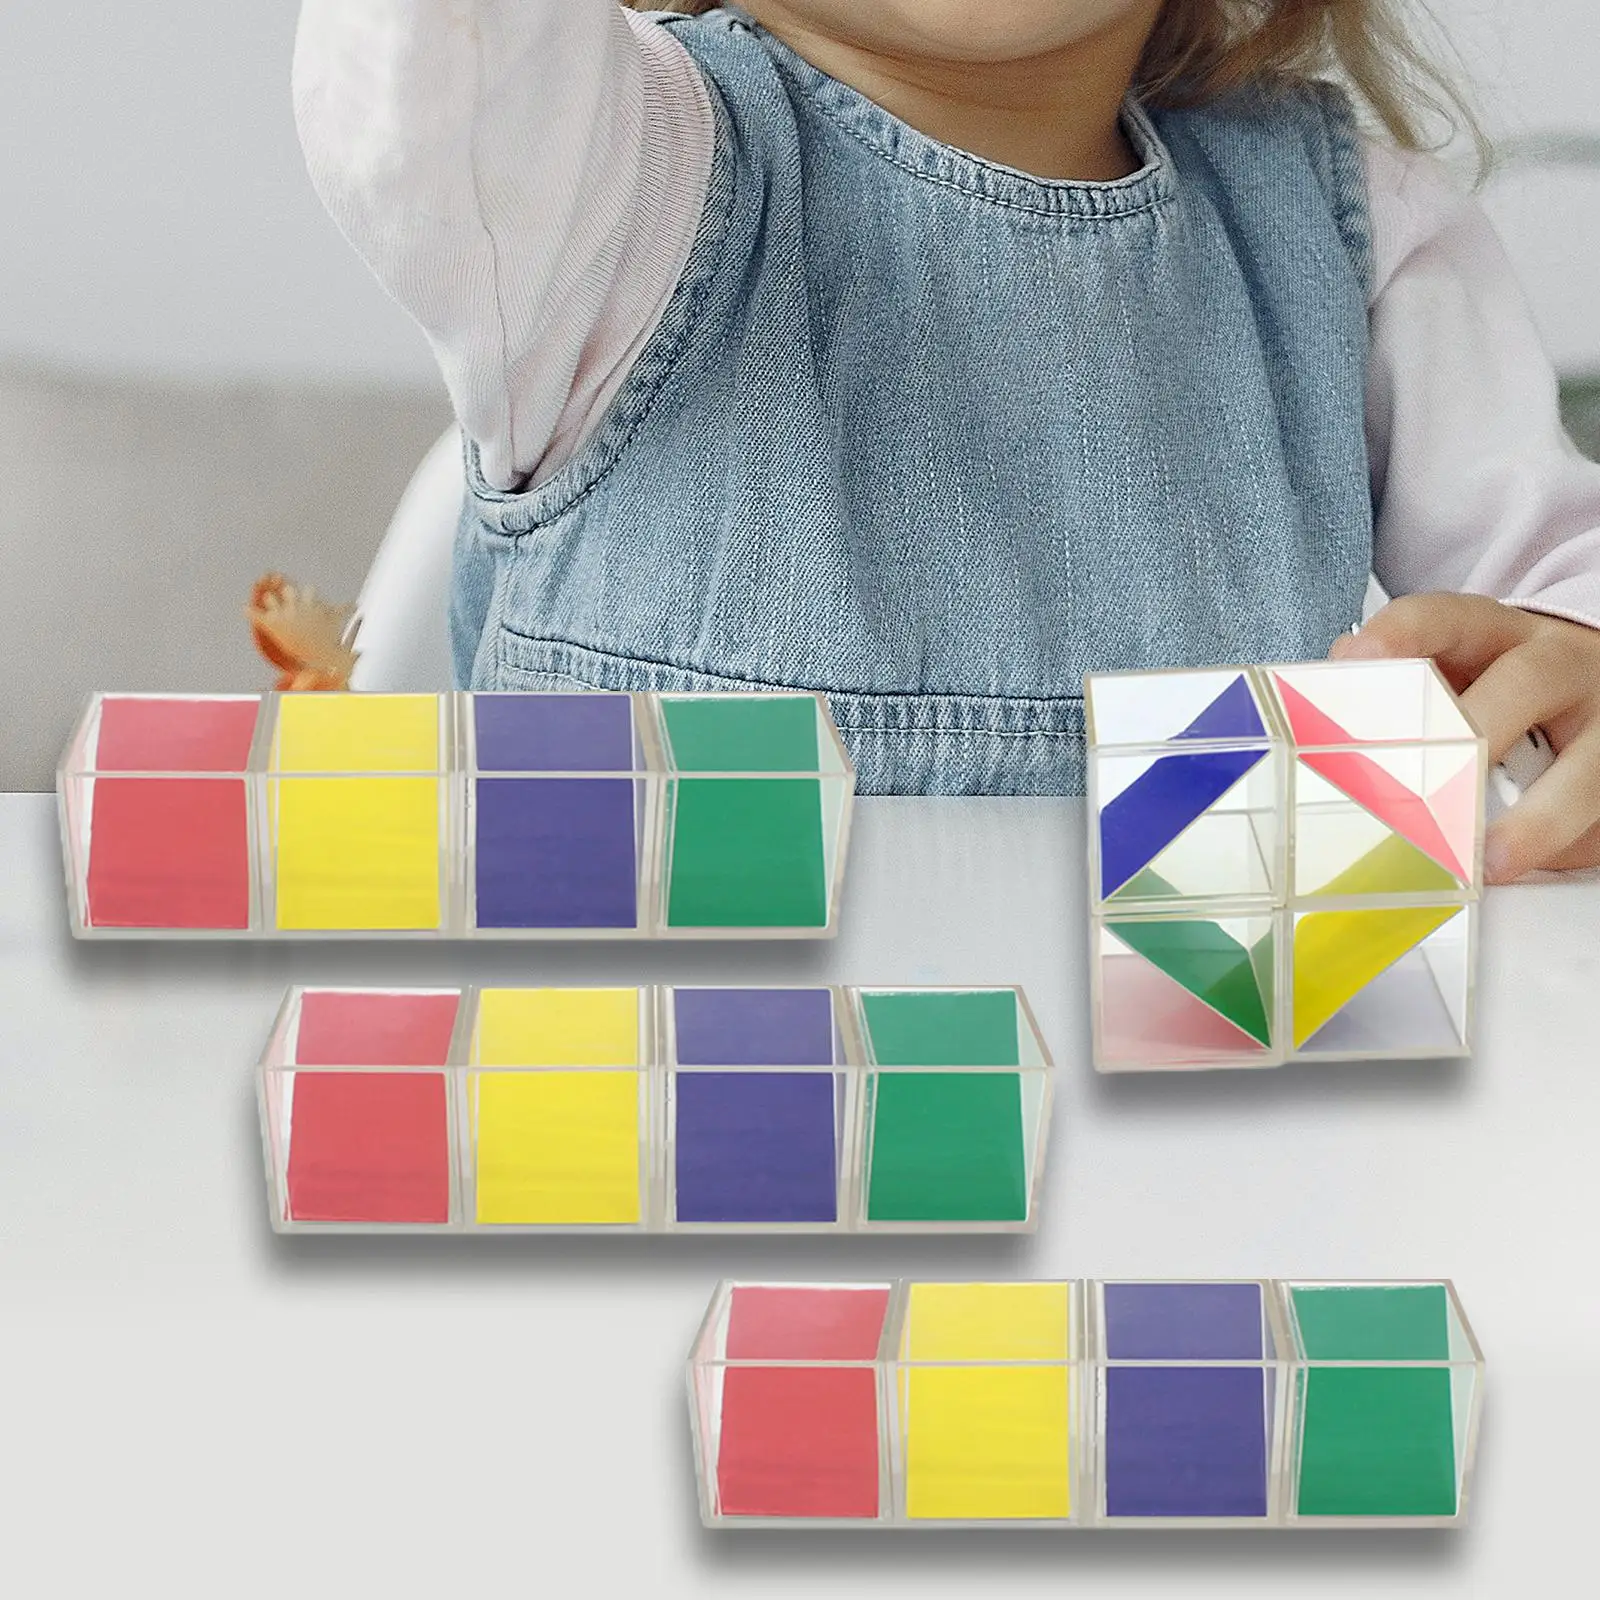 

Twist Puzzle Math Manipulatives Teaching Aids Brain Teasers Toy Math Cubes for Rewards